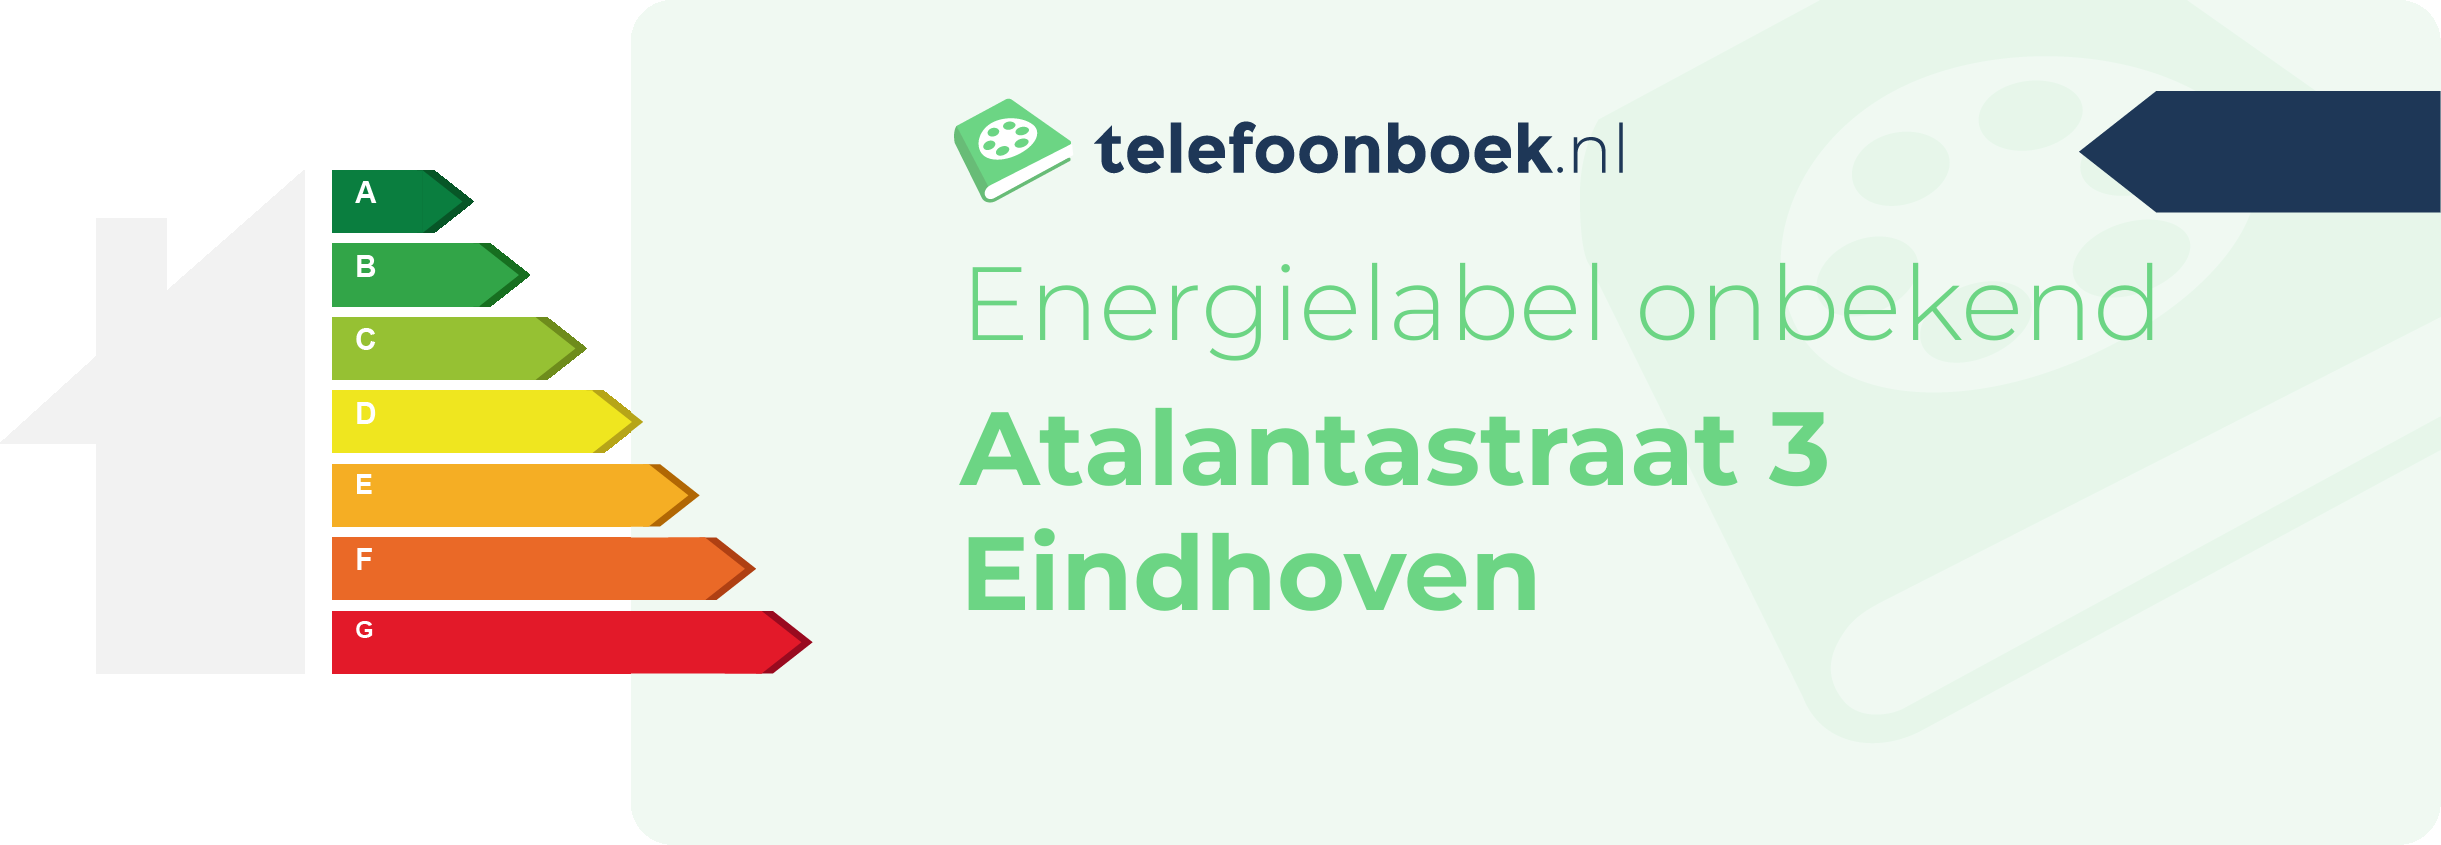 Energielabel Atalantastraat 3 Eindhoven